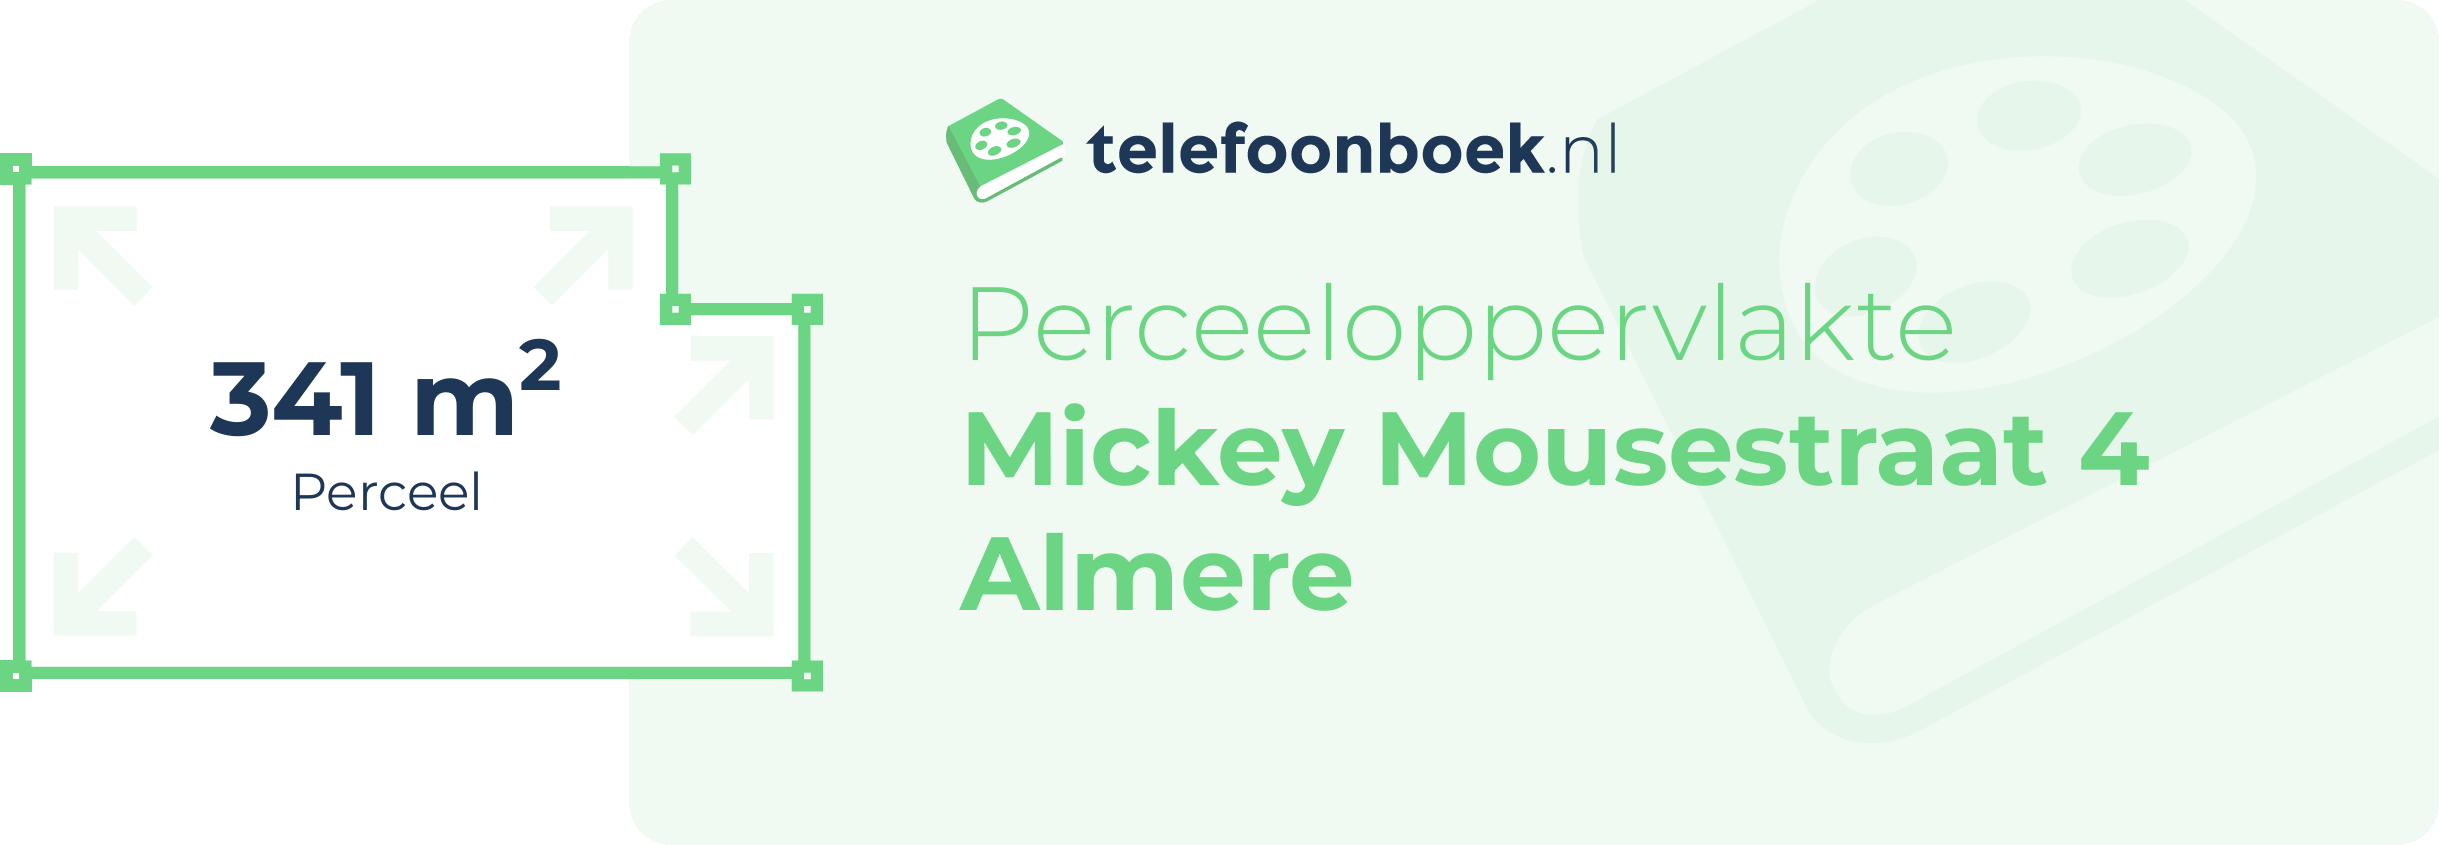 Perceeloppervlakte Mickey Mousestraat 4 Almere